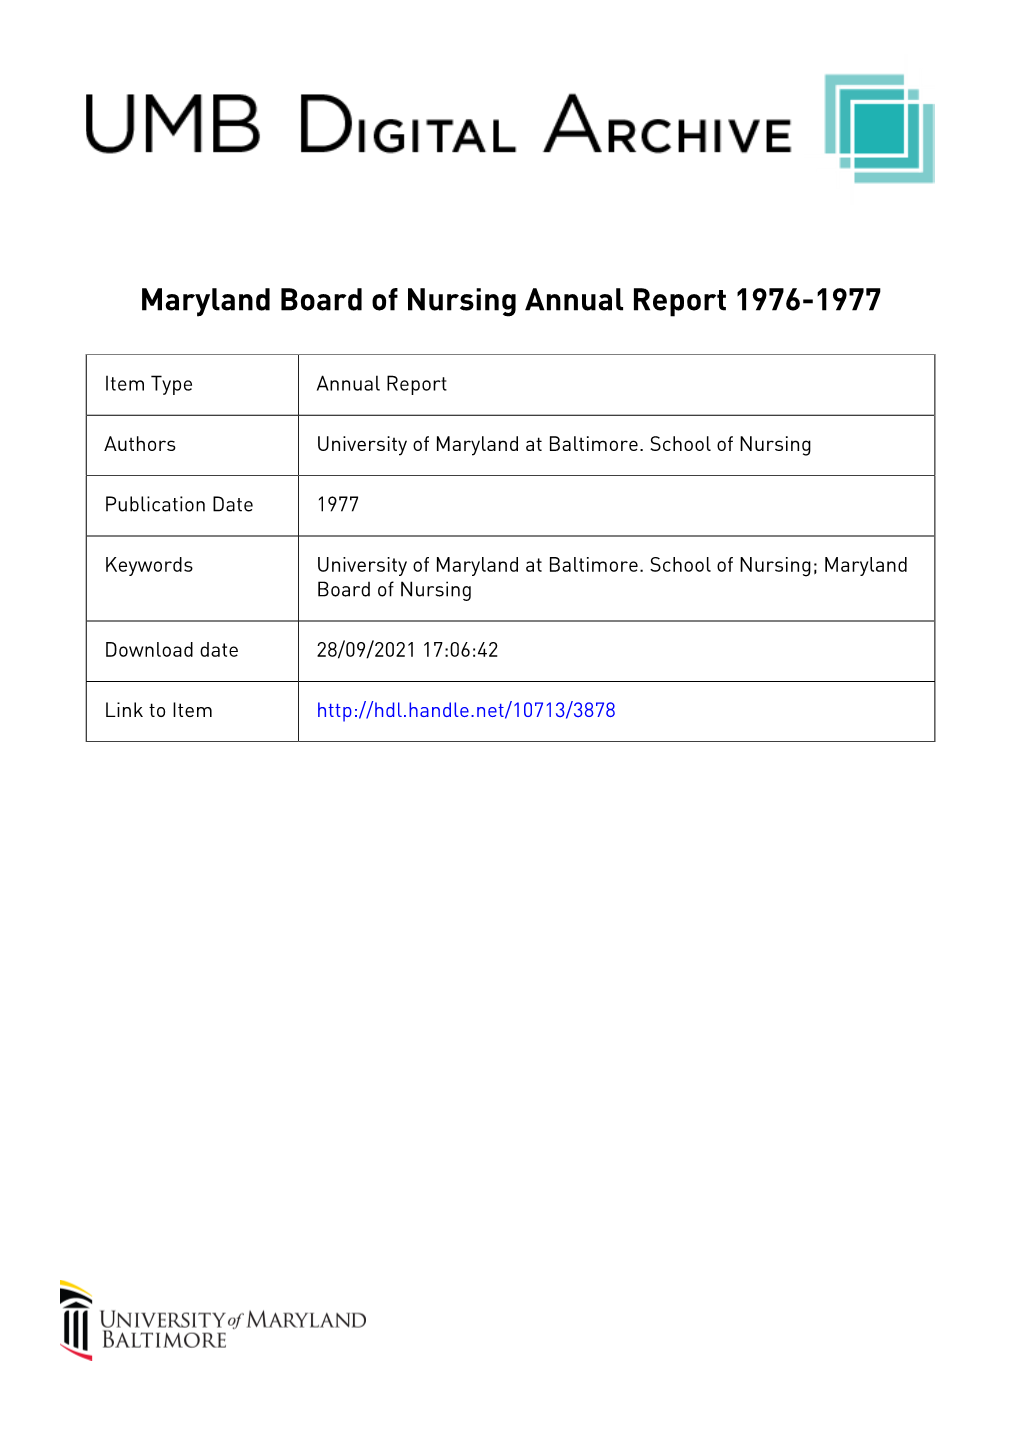 University of Maryland School of Nursing Annual